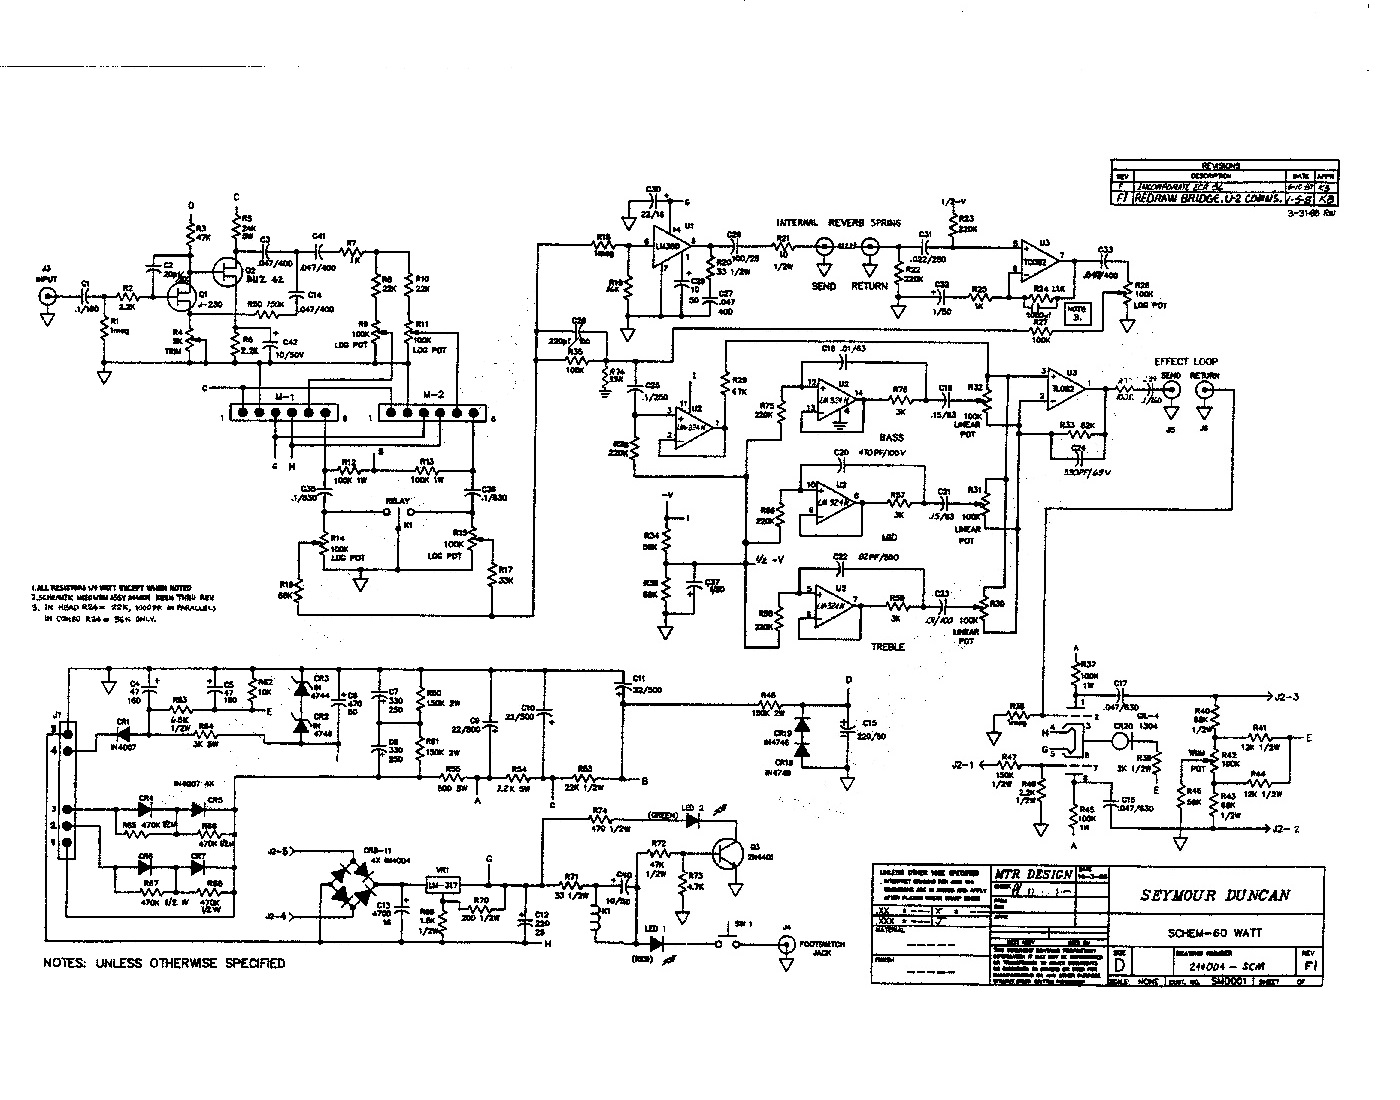 Seymour Duncan Schematic 1c.jpg